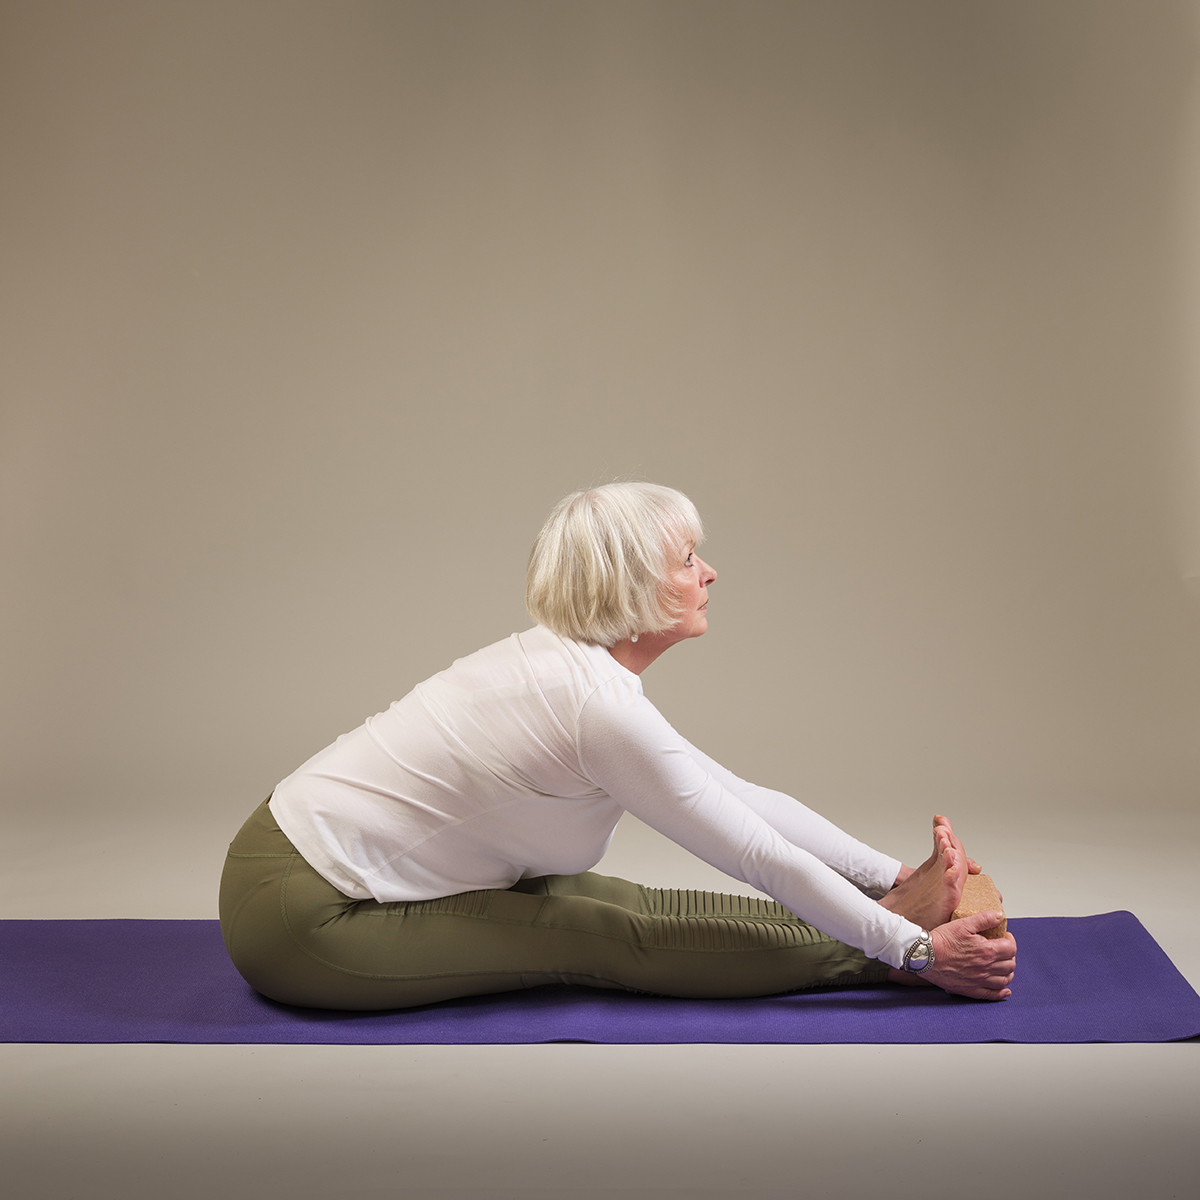 30 Days of restorative yoga — YOGARU